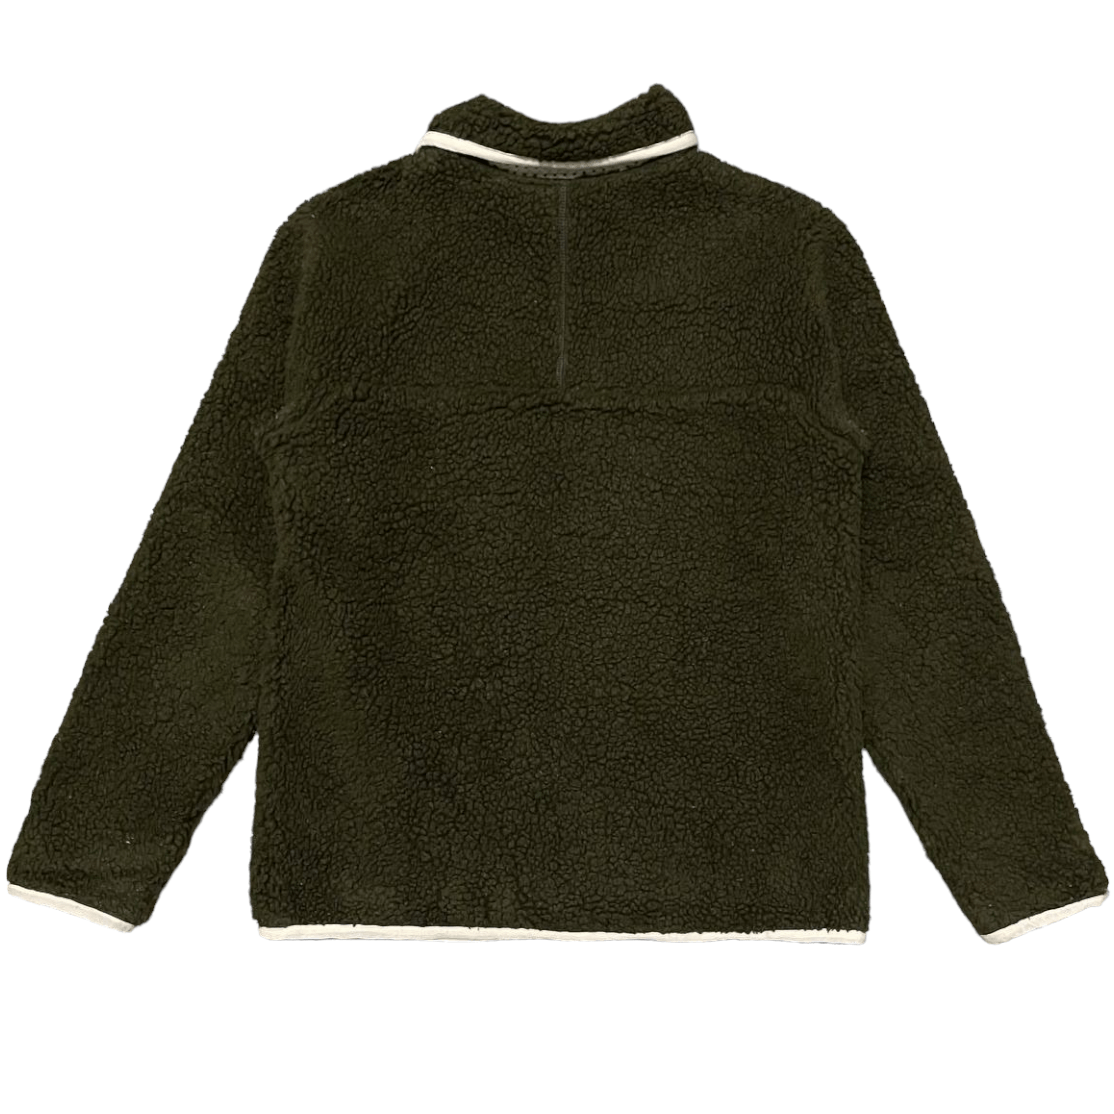 A/T Atsuro Tayama Pile Poil Fleece Jacket - 11